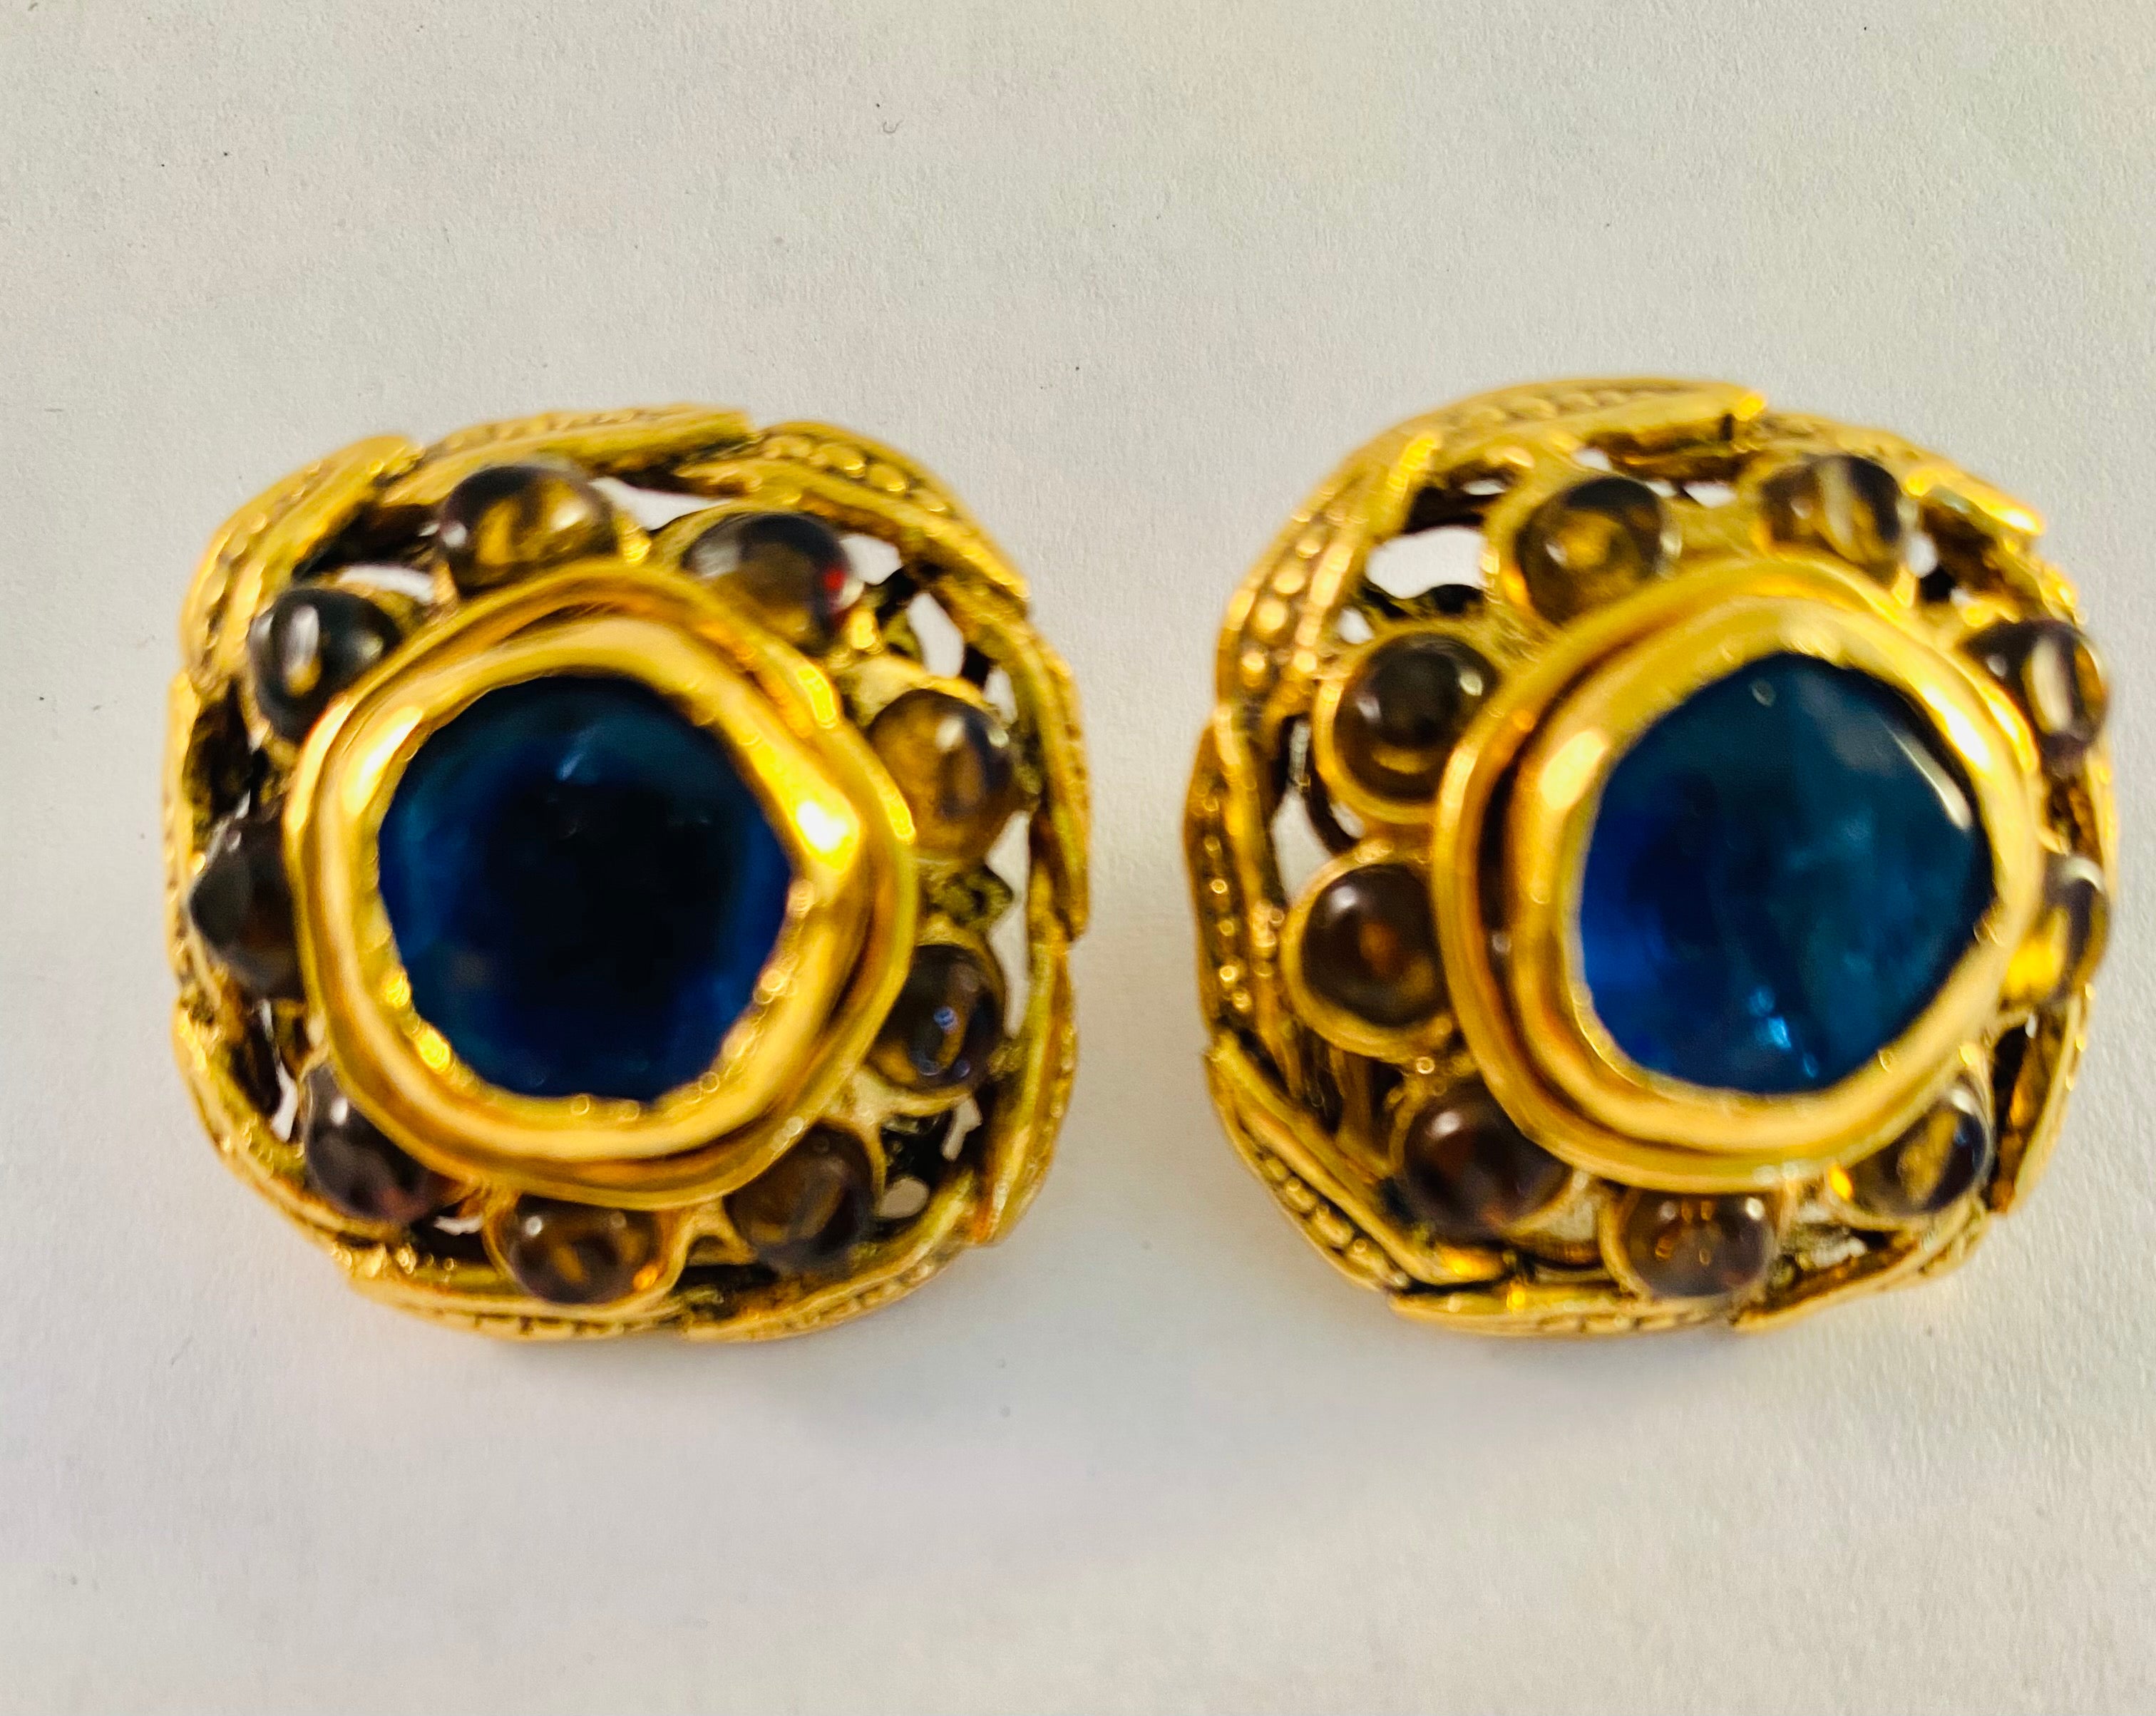 Kalinger Paris earrings